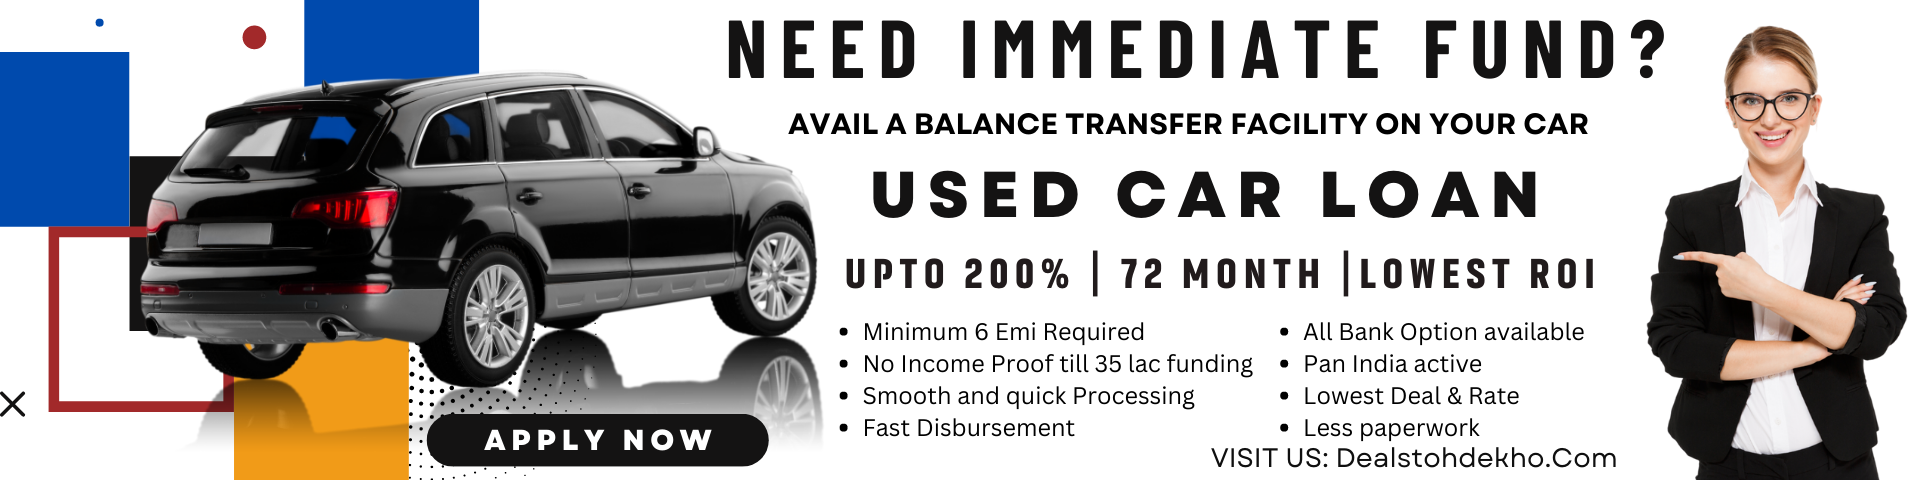 apply used car loan upto 200% of insurance value